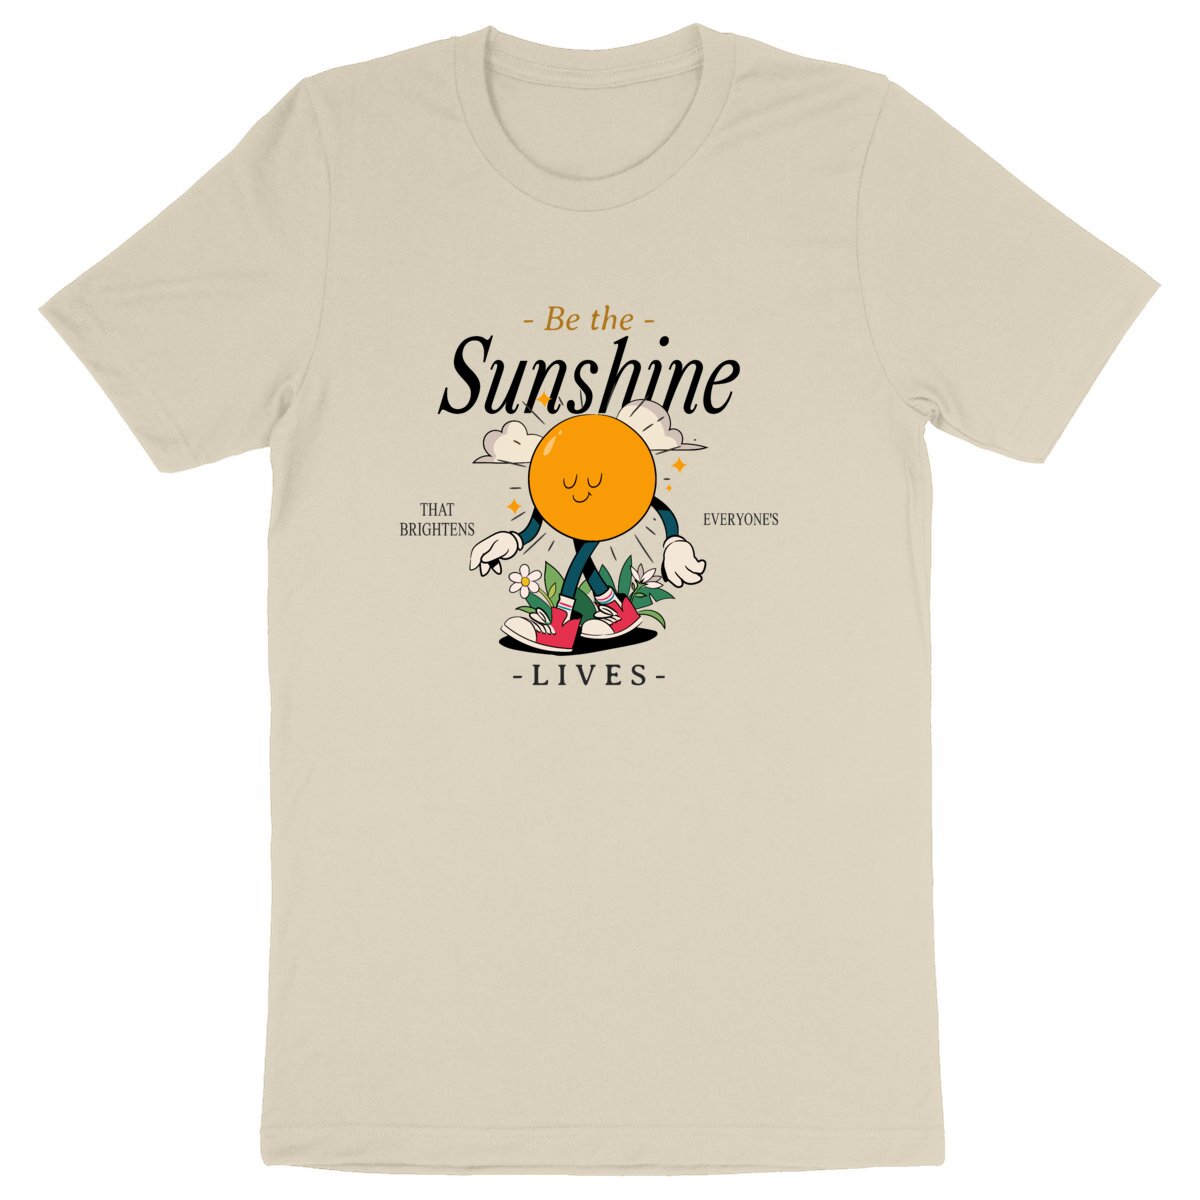 Be the Sunshine - Organic T-shirt